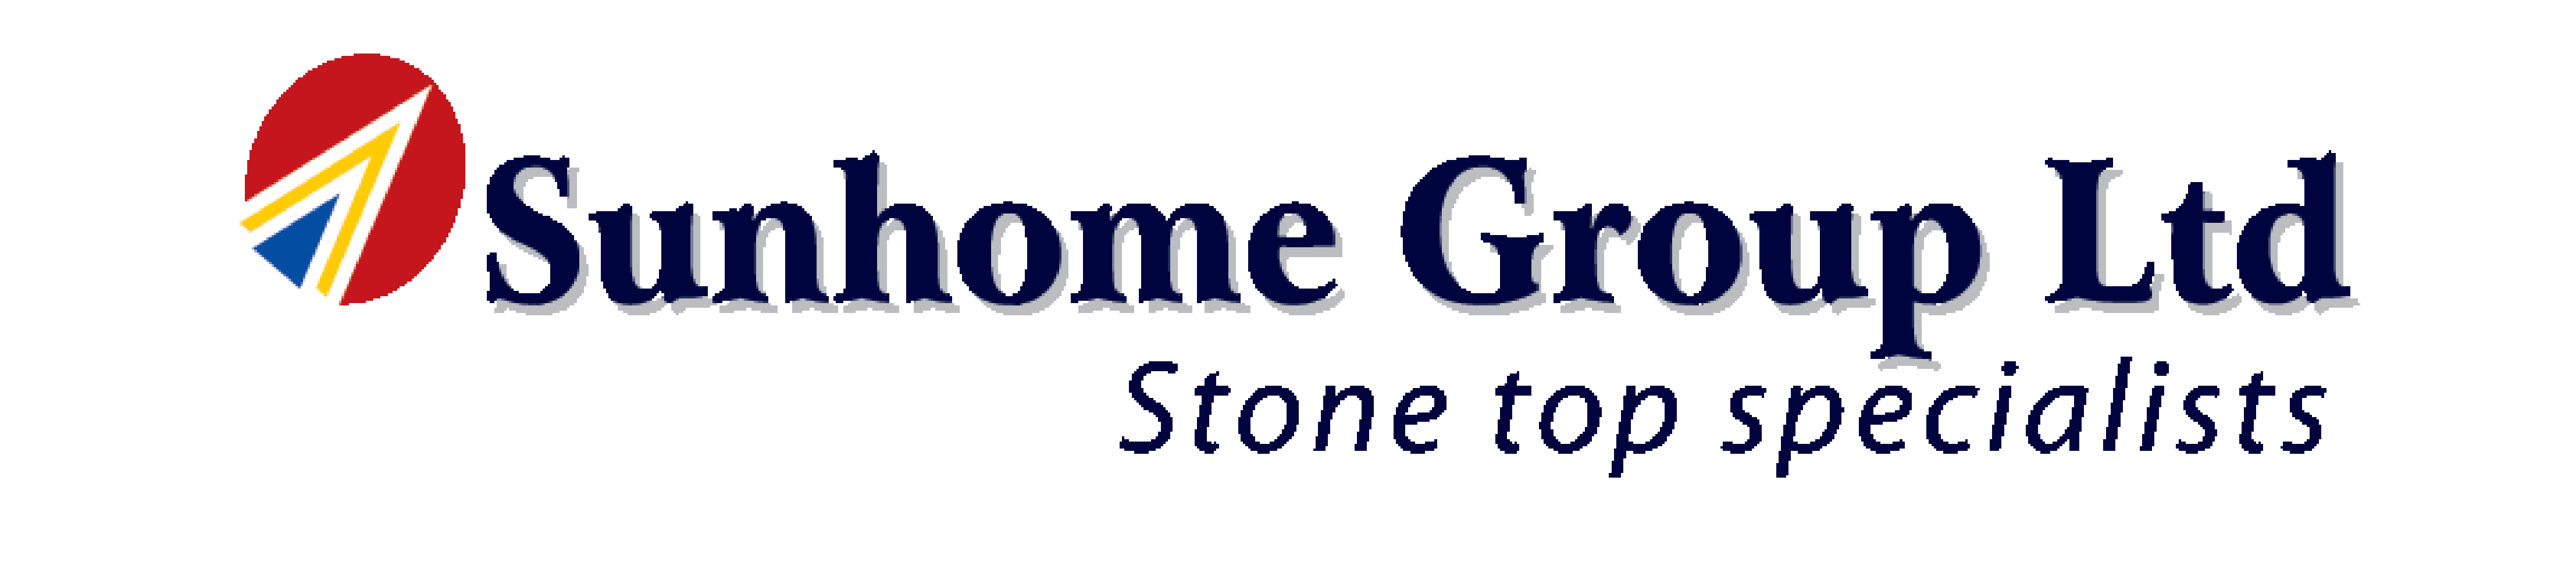 Sunhome Group Ltd.